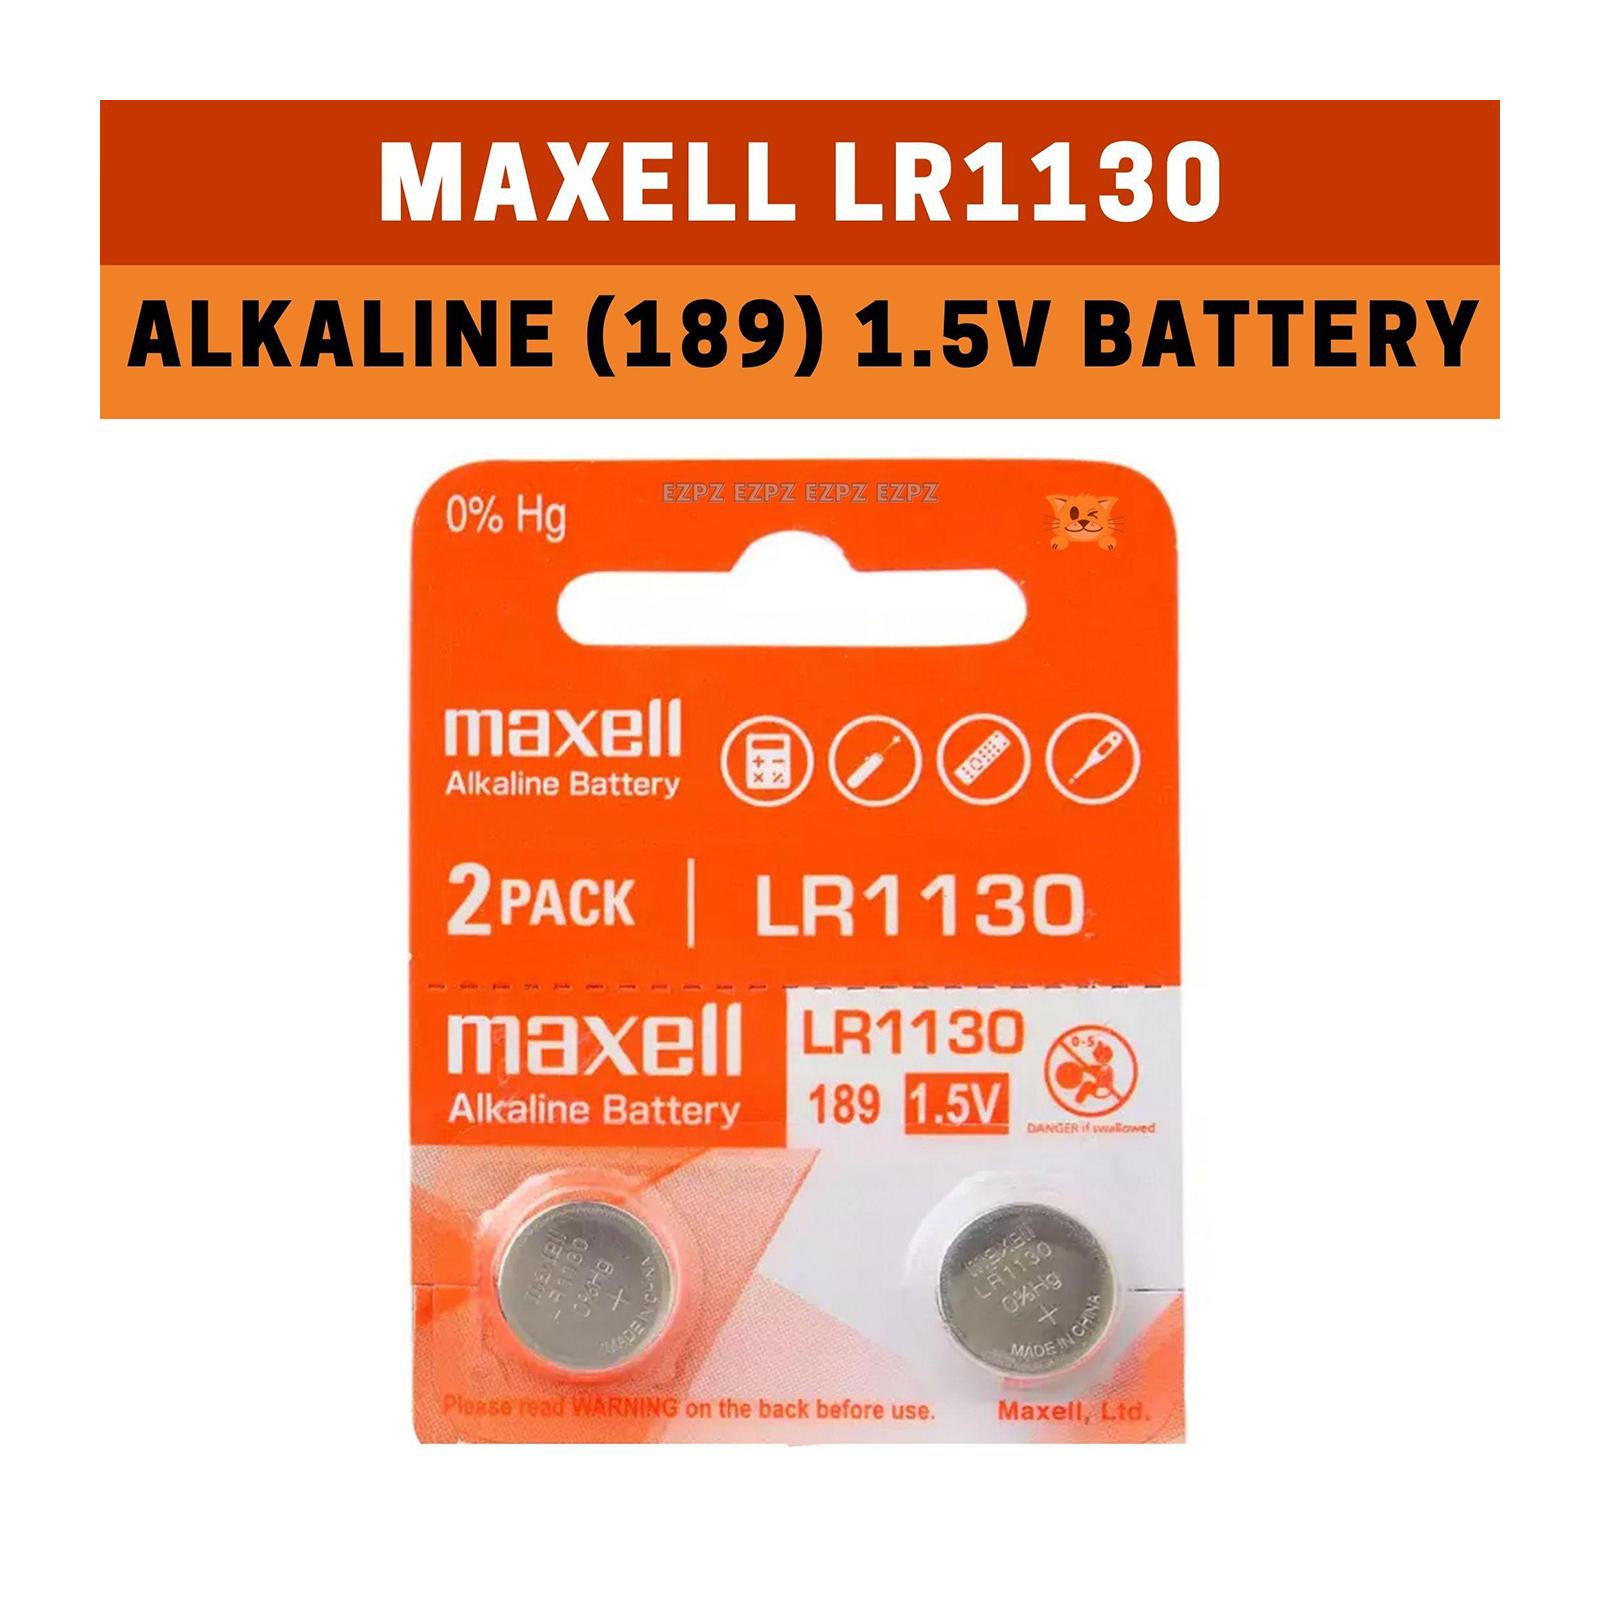 Maxell LR1130 Alkaline Battery 1.5V | Lazada Singapore